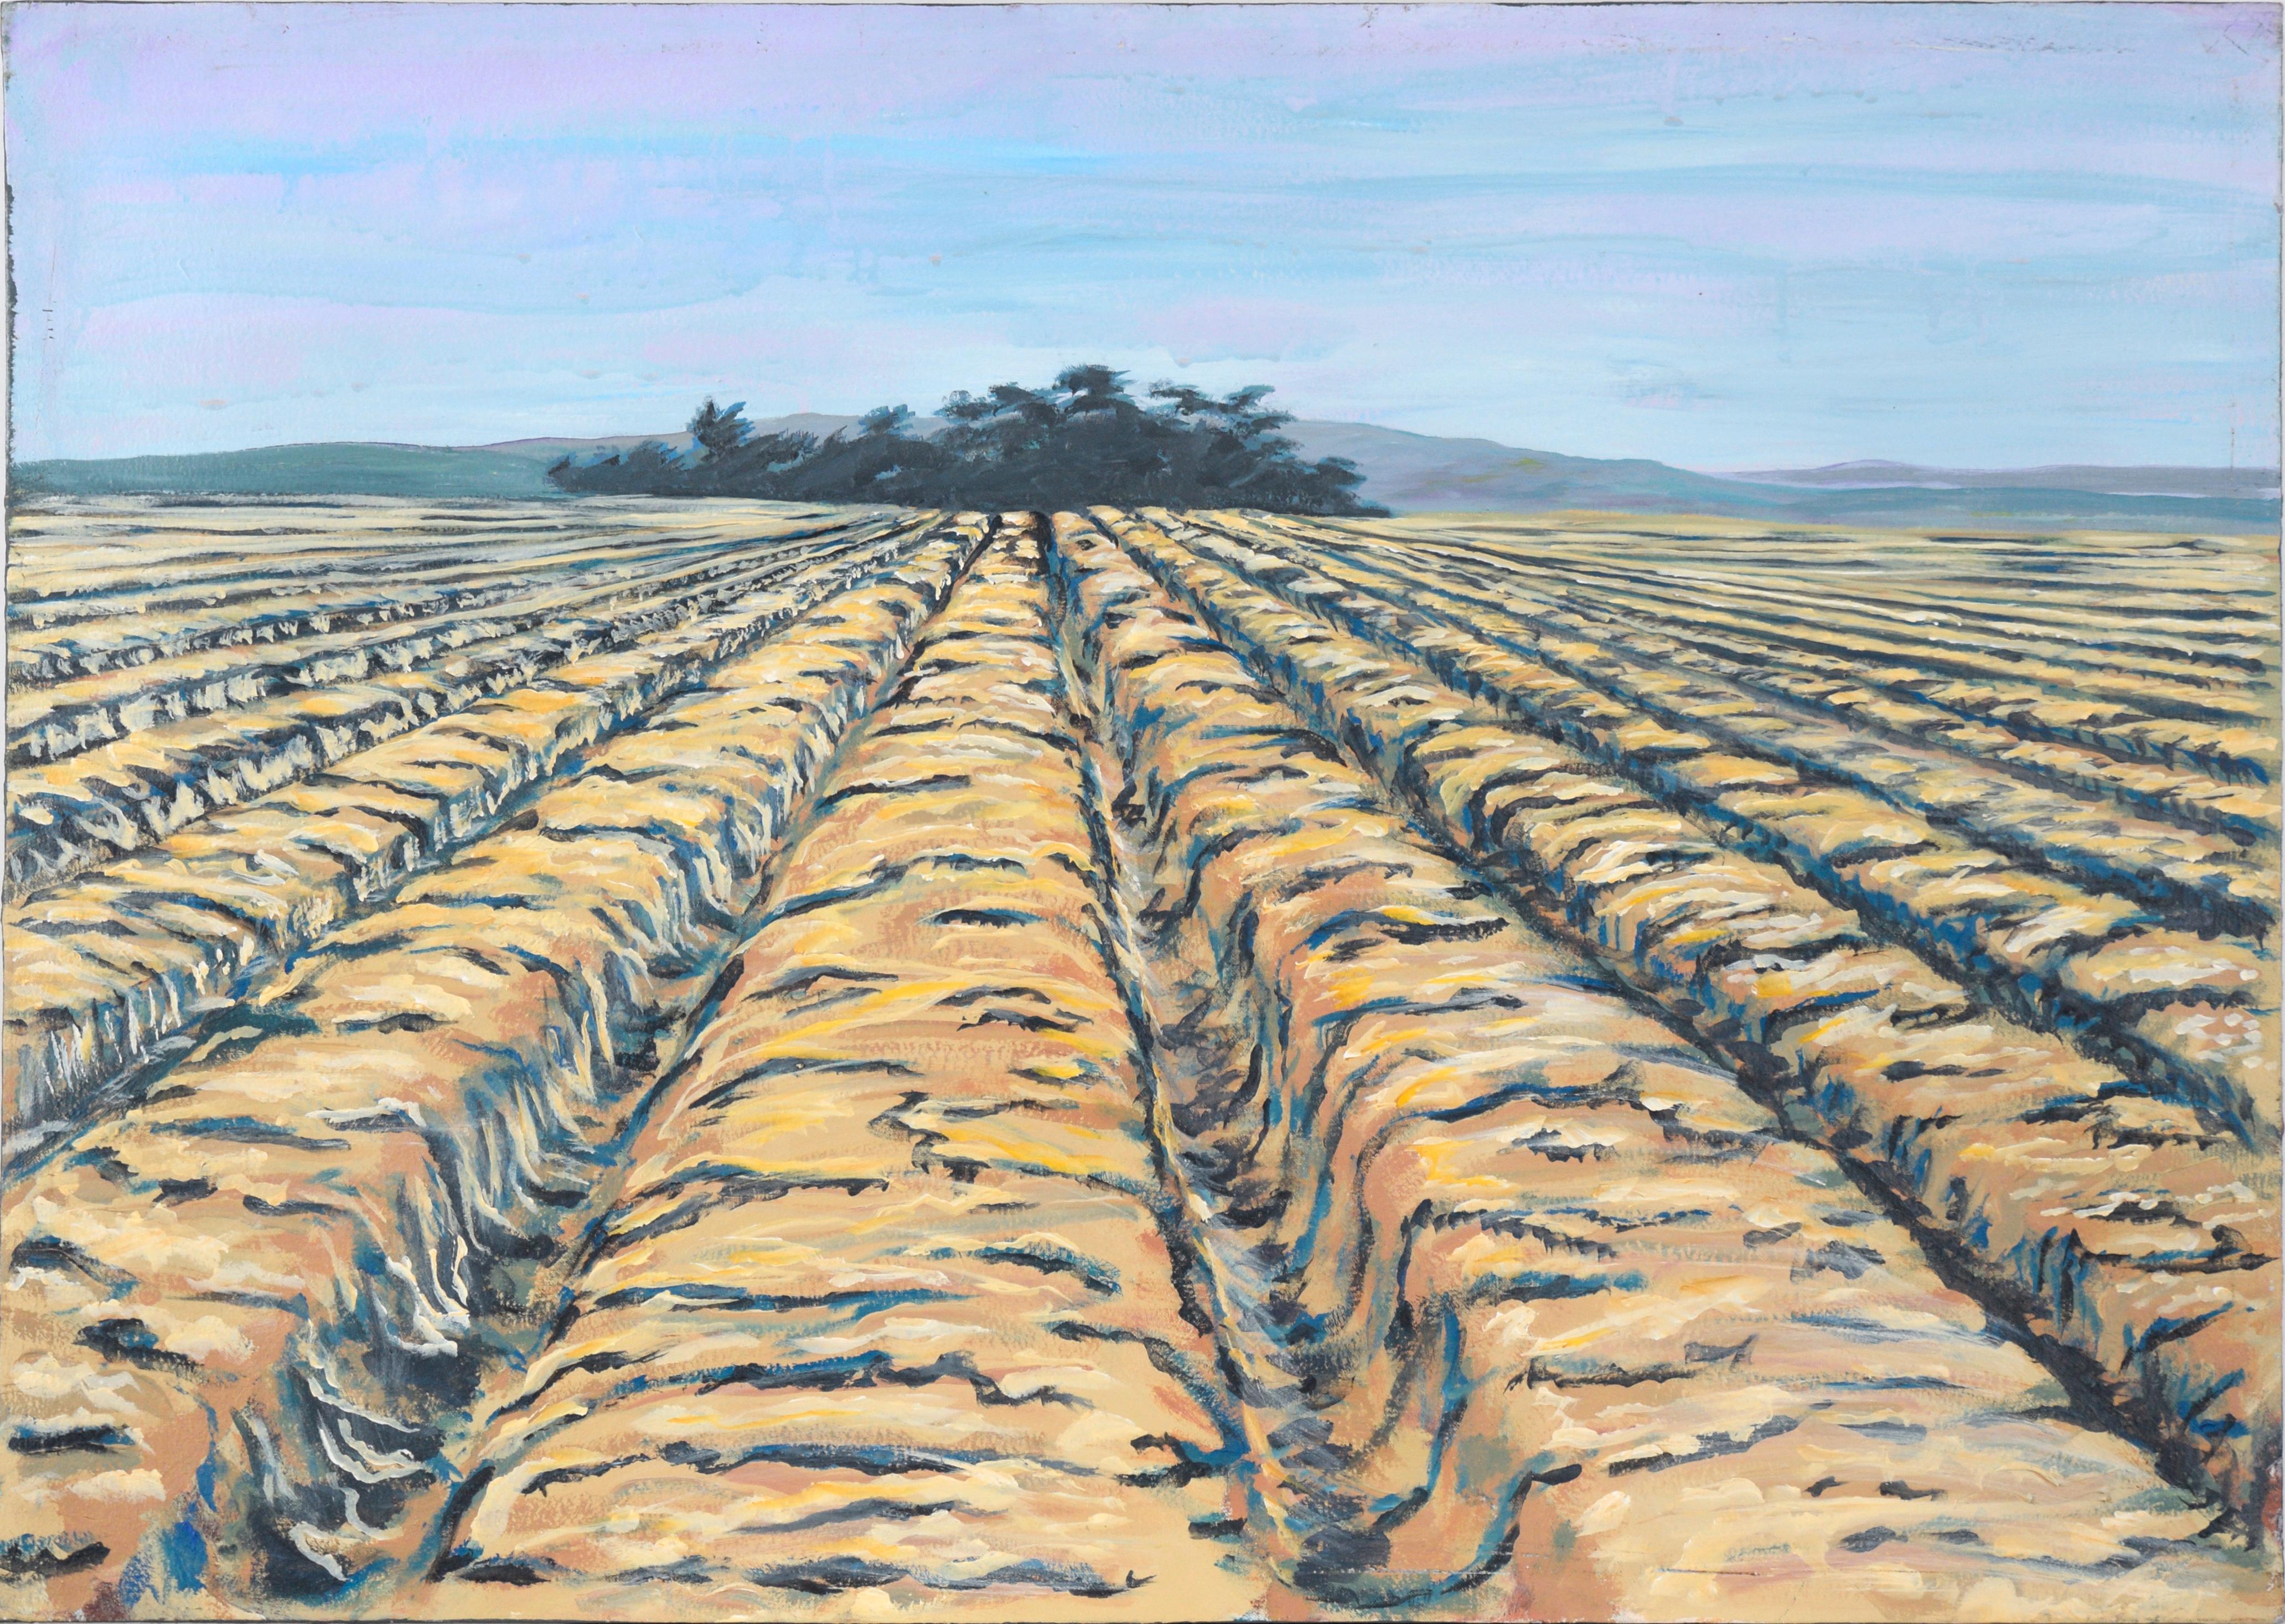 Unknown Landscape Painting - Moss Landing Farm Landscape in Acrylic on Canvas